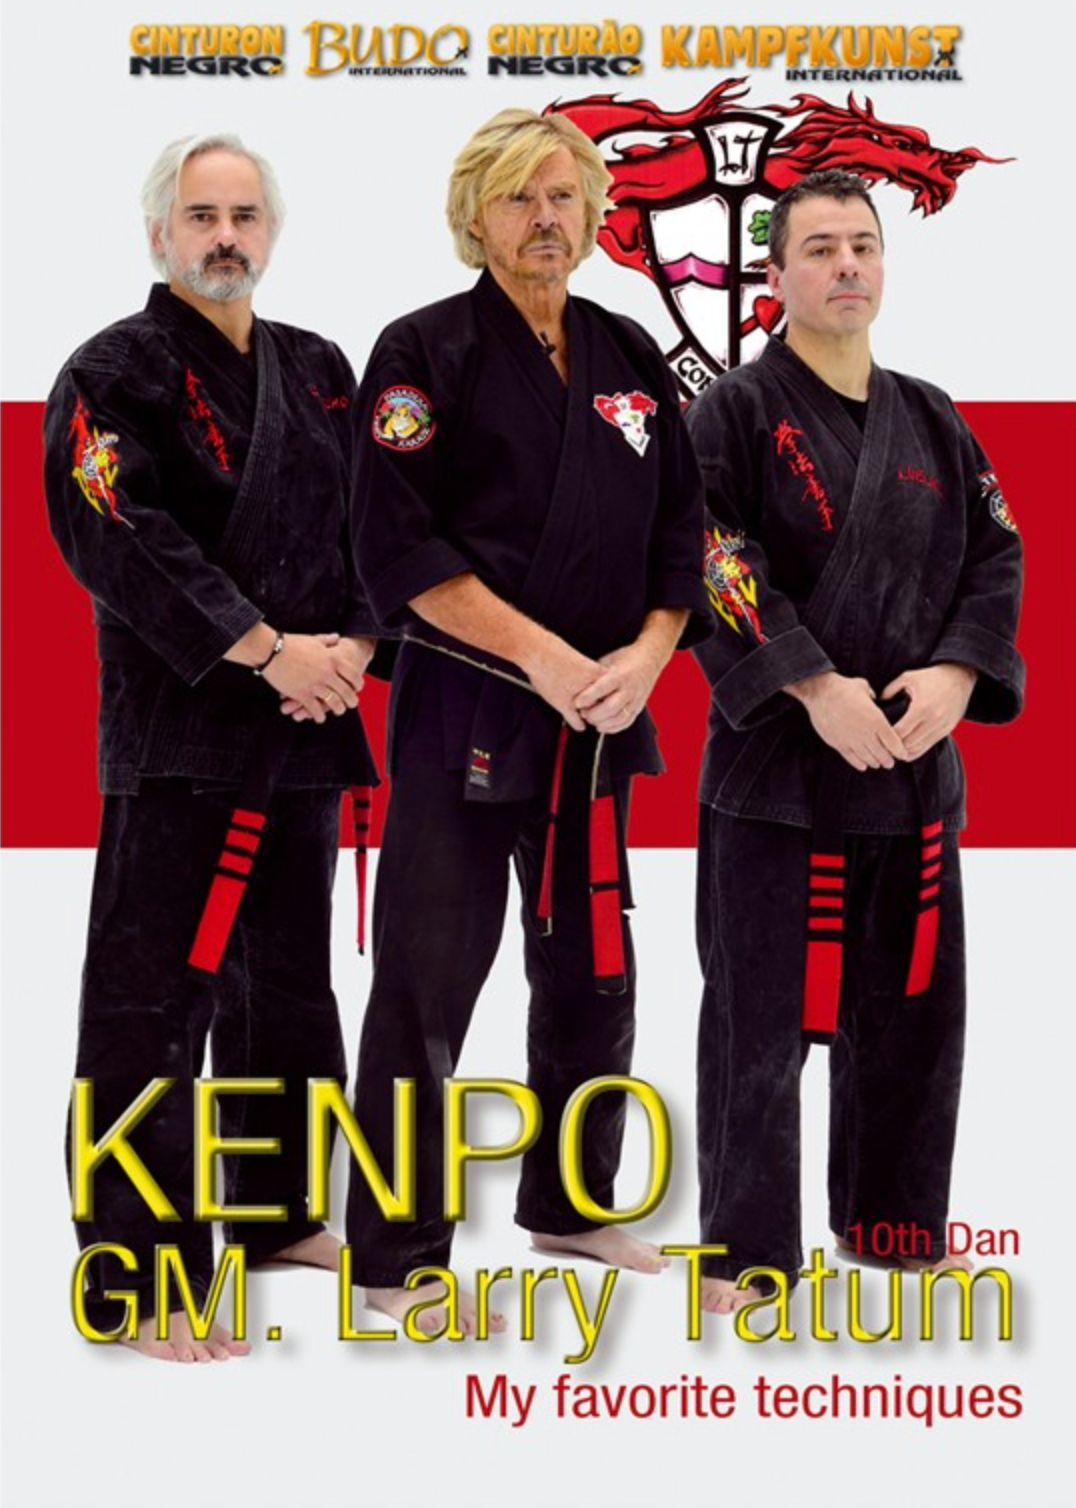 Kenpo, My Favorite Techniques DVD with Larry Tatum & Friends - Budovideos Inc